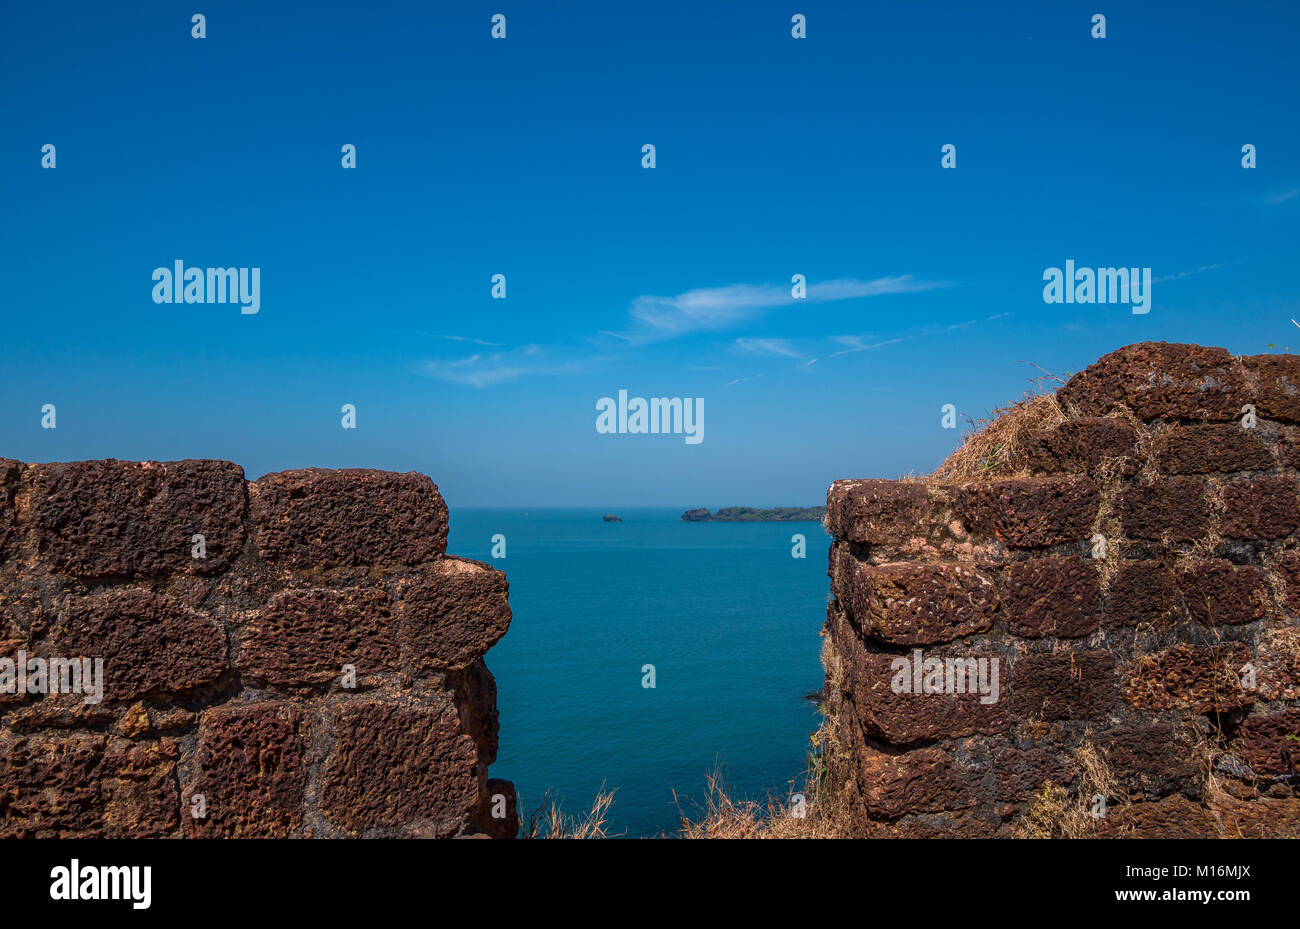 Sea view from Cabo de Rama fort, near Agonda beach, Goa state, India Stock Photo